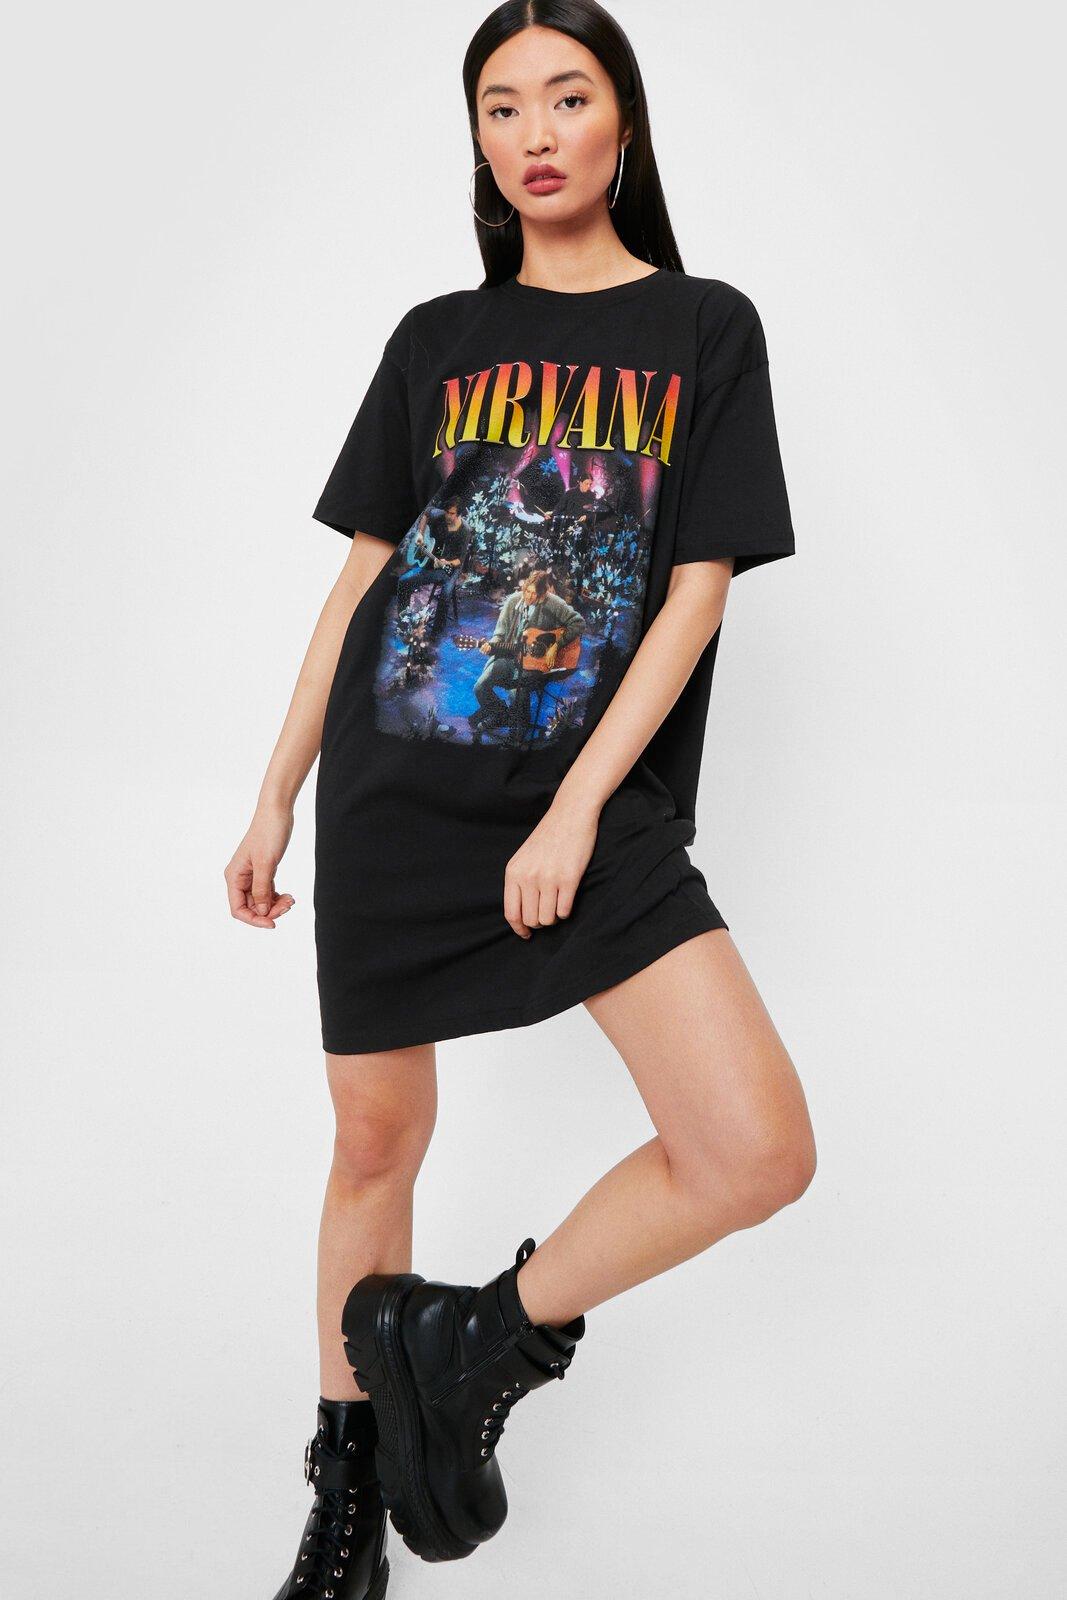 Nirvana Graphic Band T-Shirt Dress ...